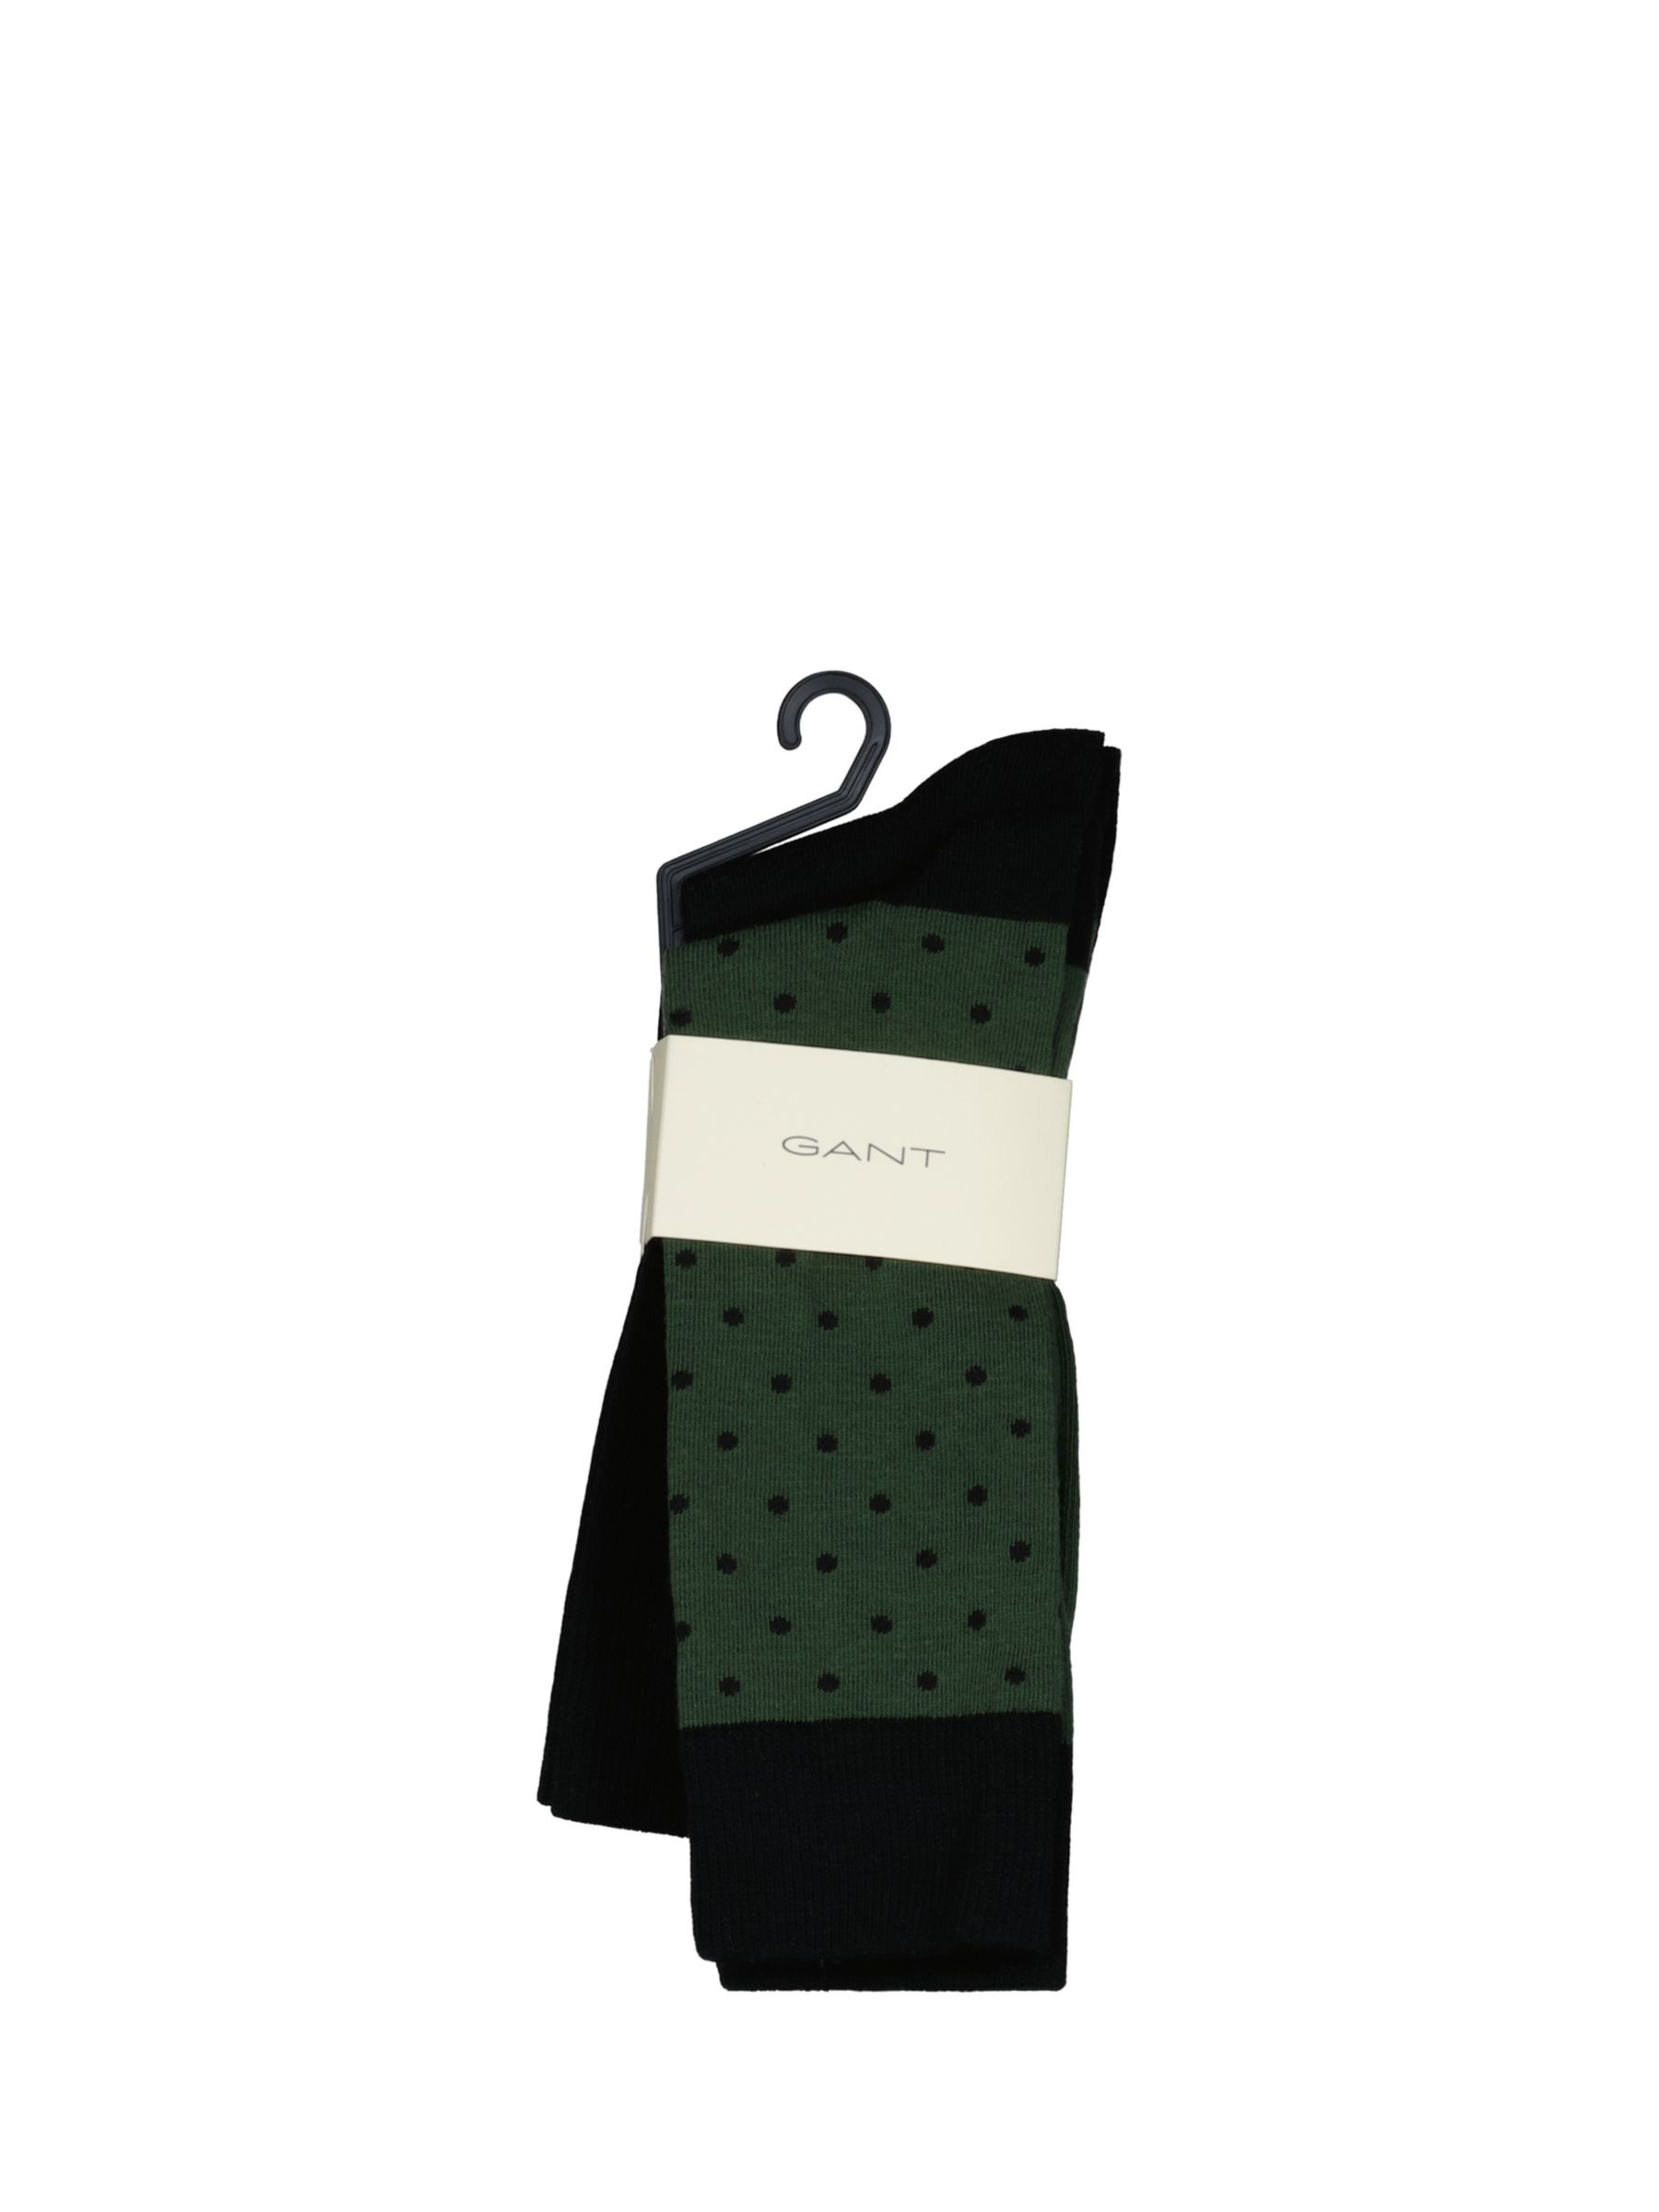 GANT Combed Cotton Socks, Pack of 2, Green/Black, S-M